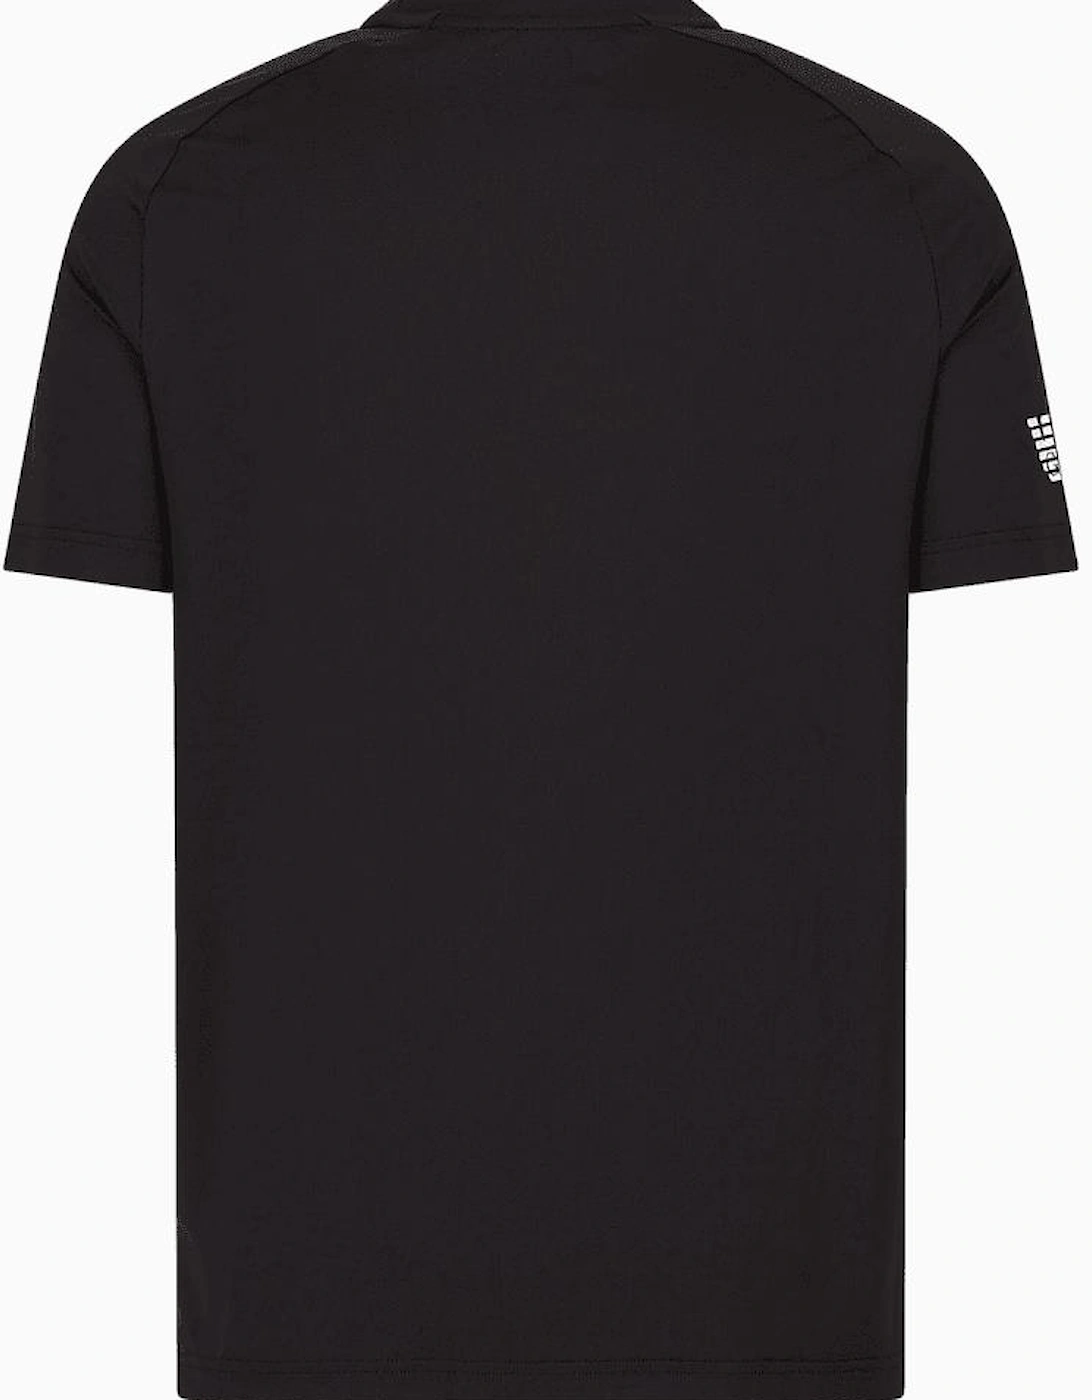 Ventus7 Breathable Black Poly T-Shirt